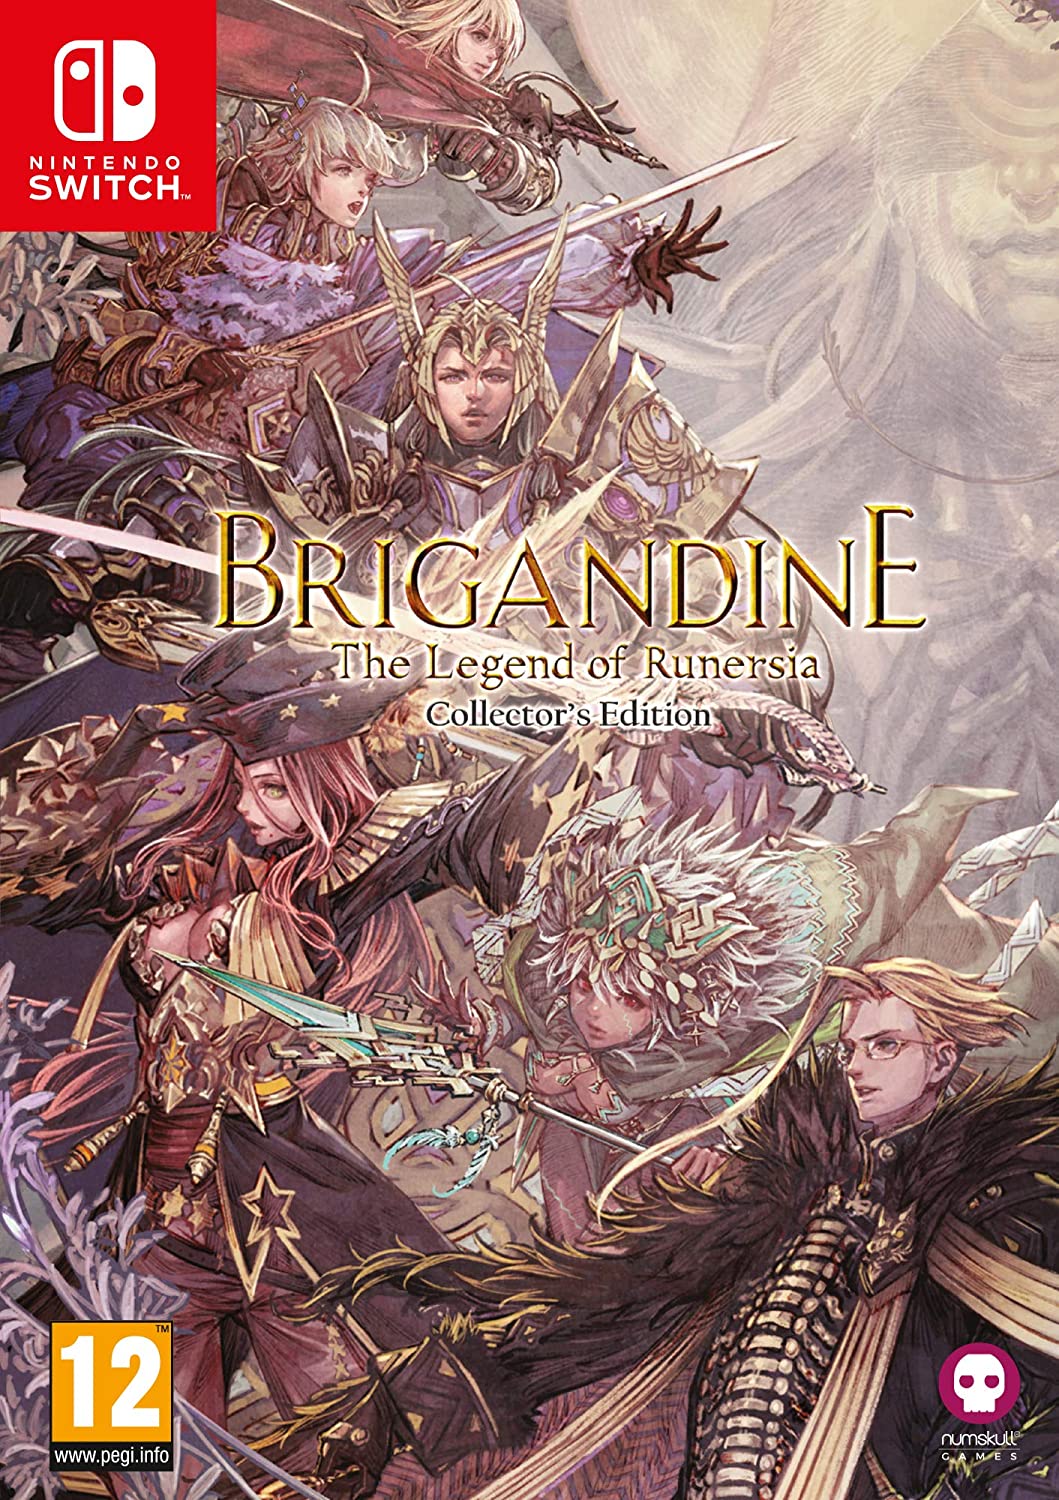 Nintendo Switch Brigandine: The Legend of Runersia Collector's Edition